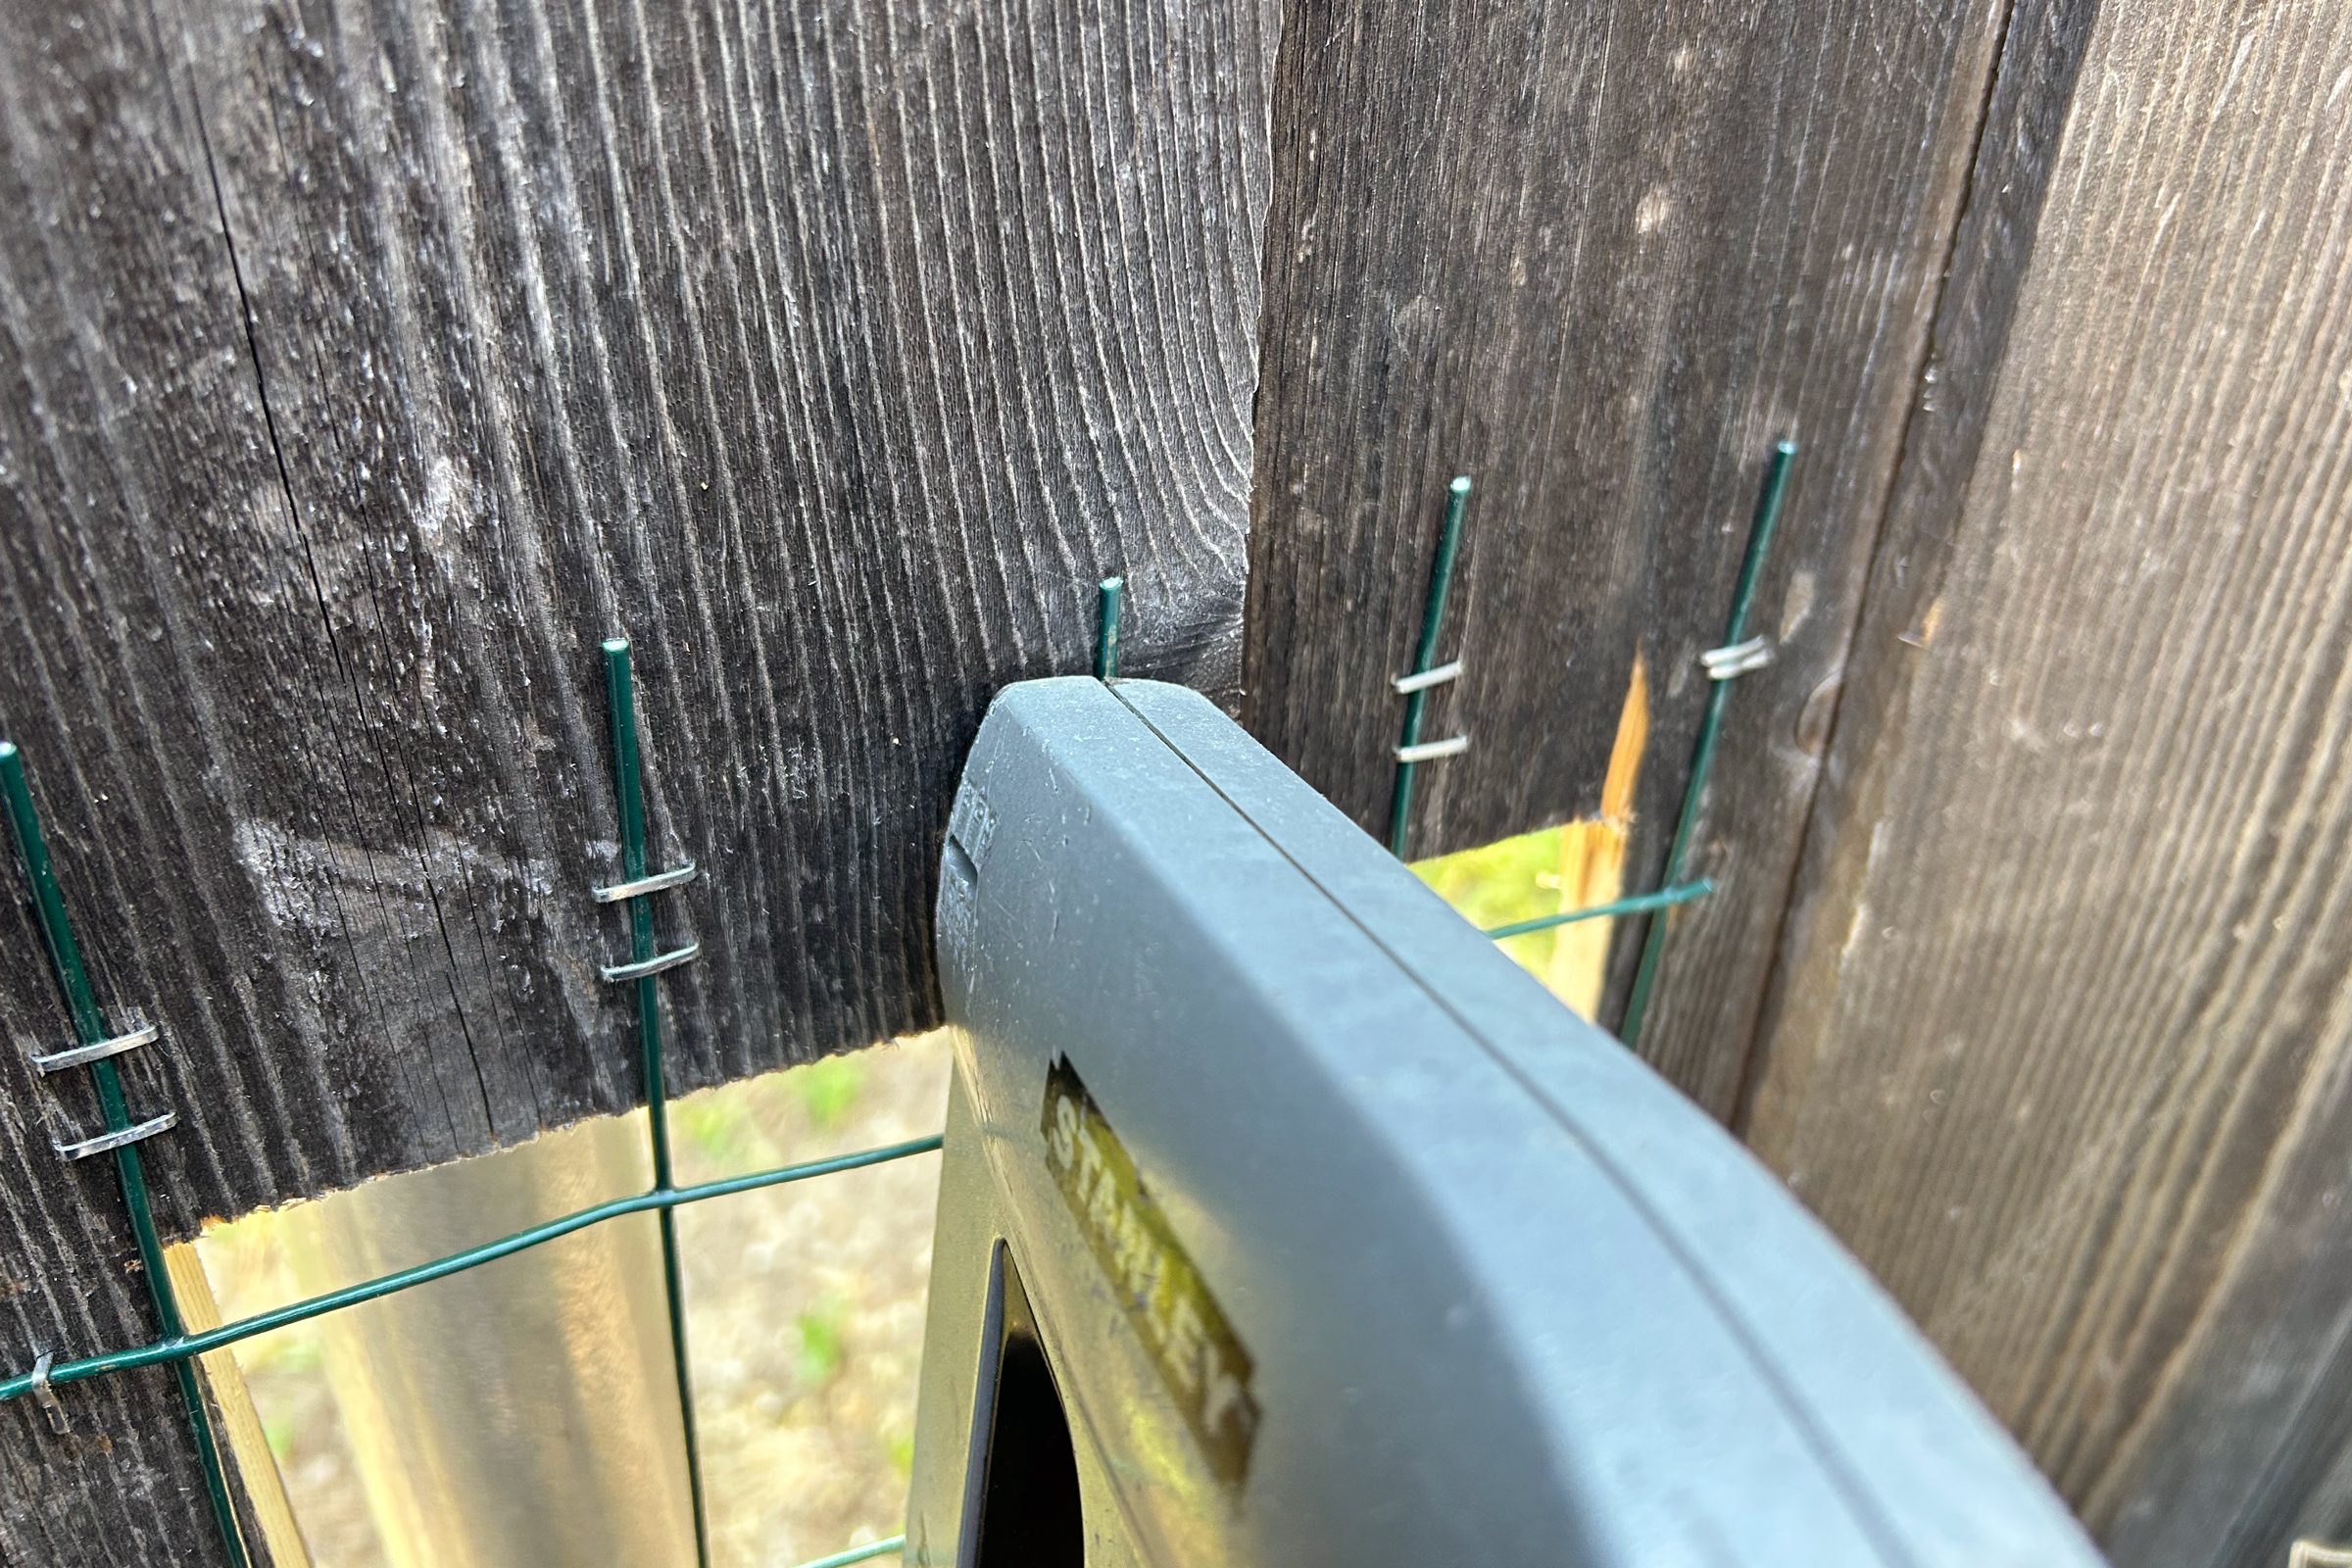 stapling chicken wire to fence